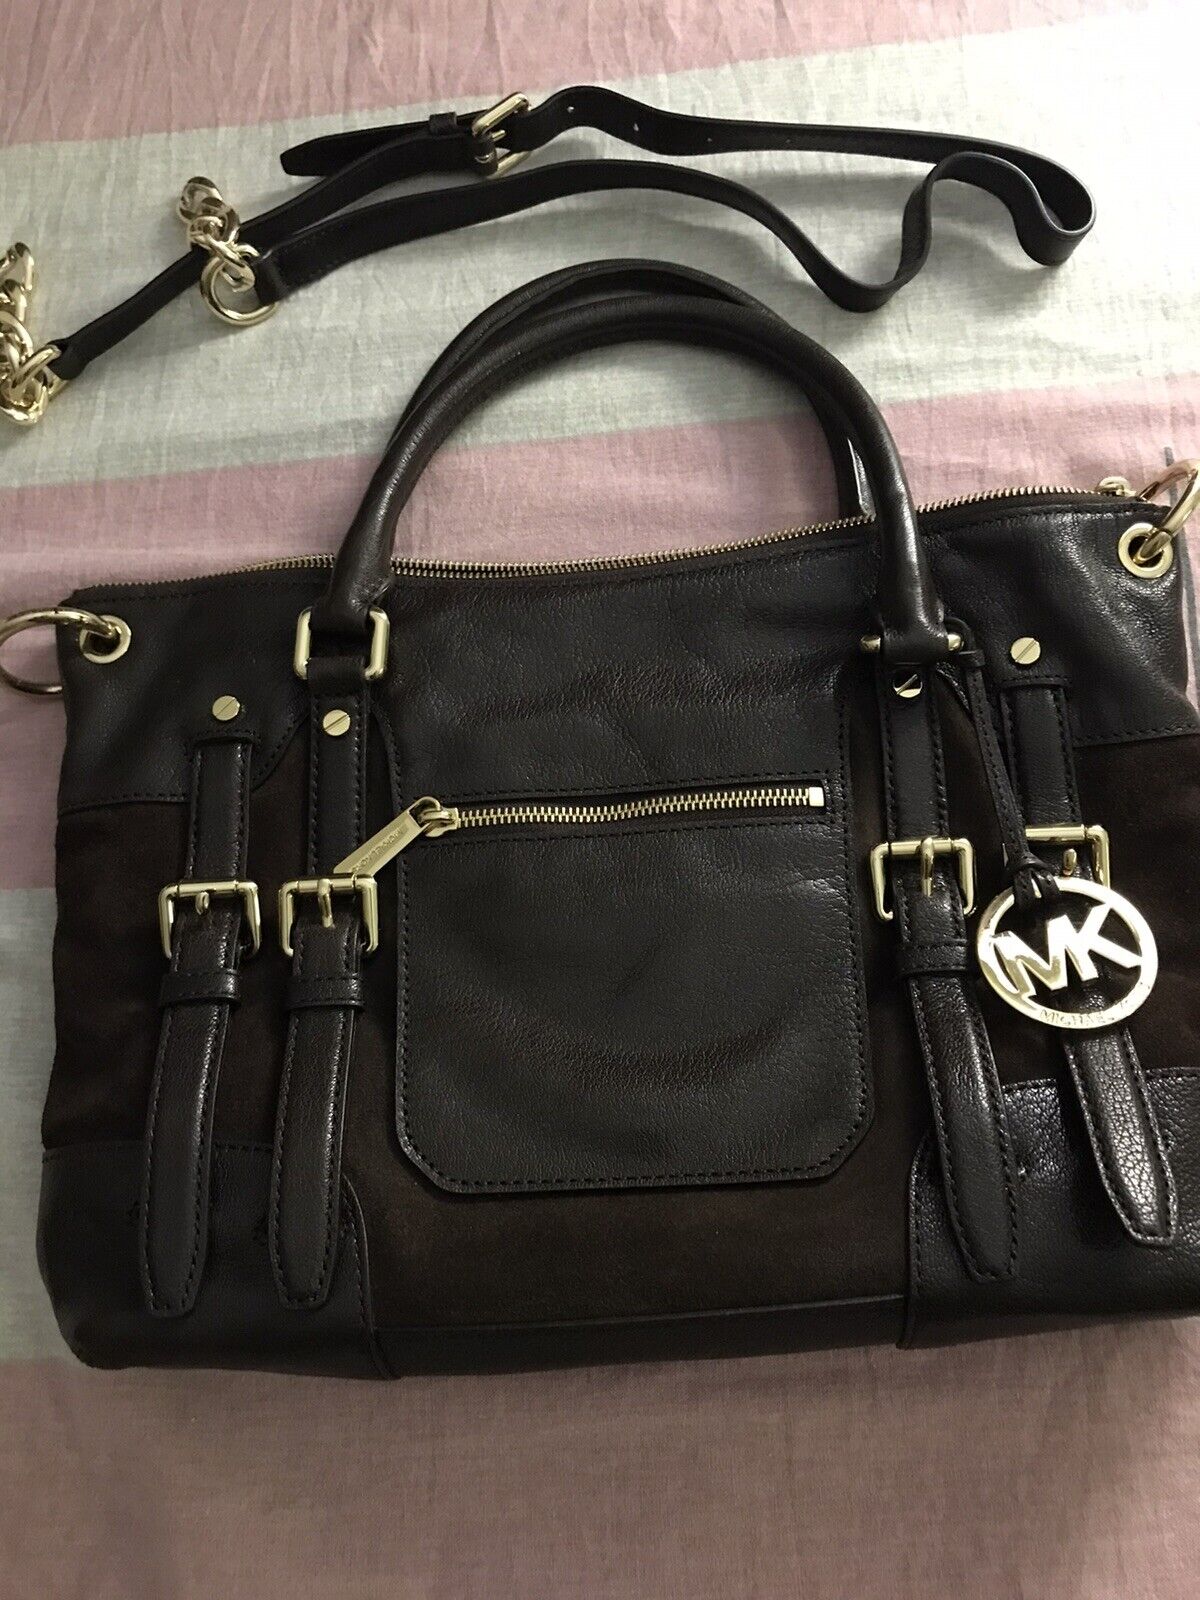 Michael Kors Handbag 99% new all leather bag - pick up only zip 94597